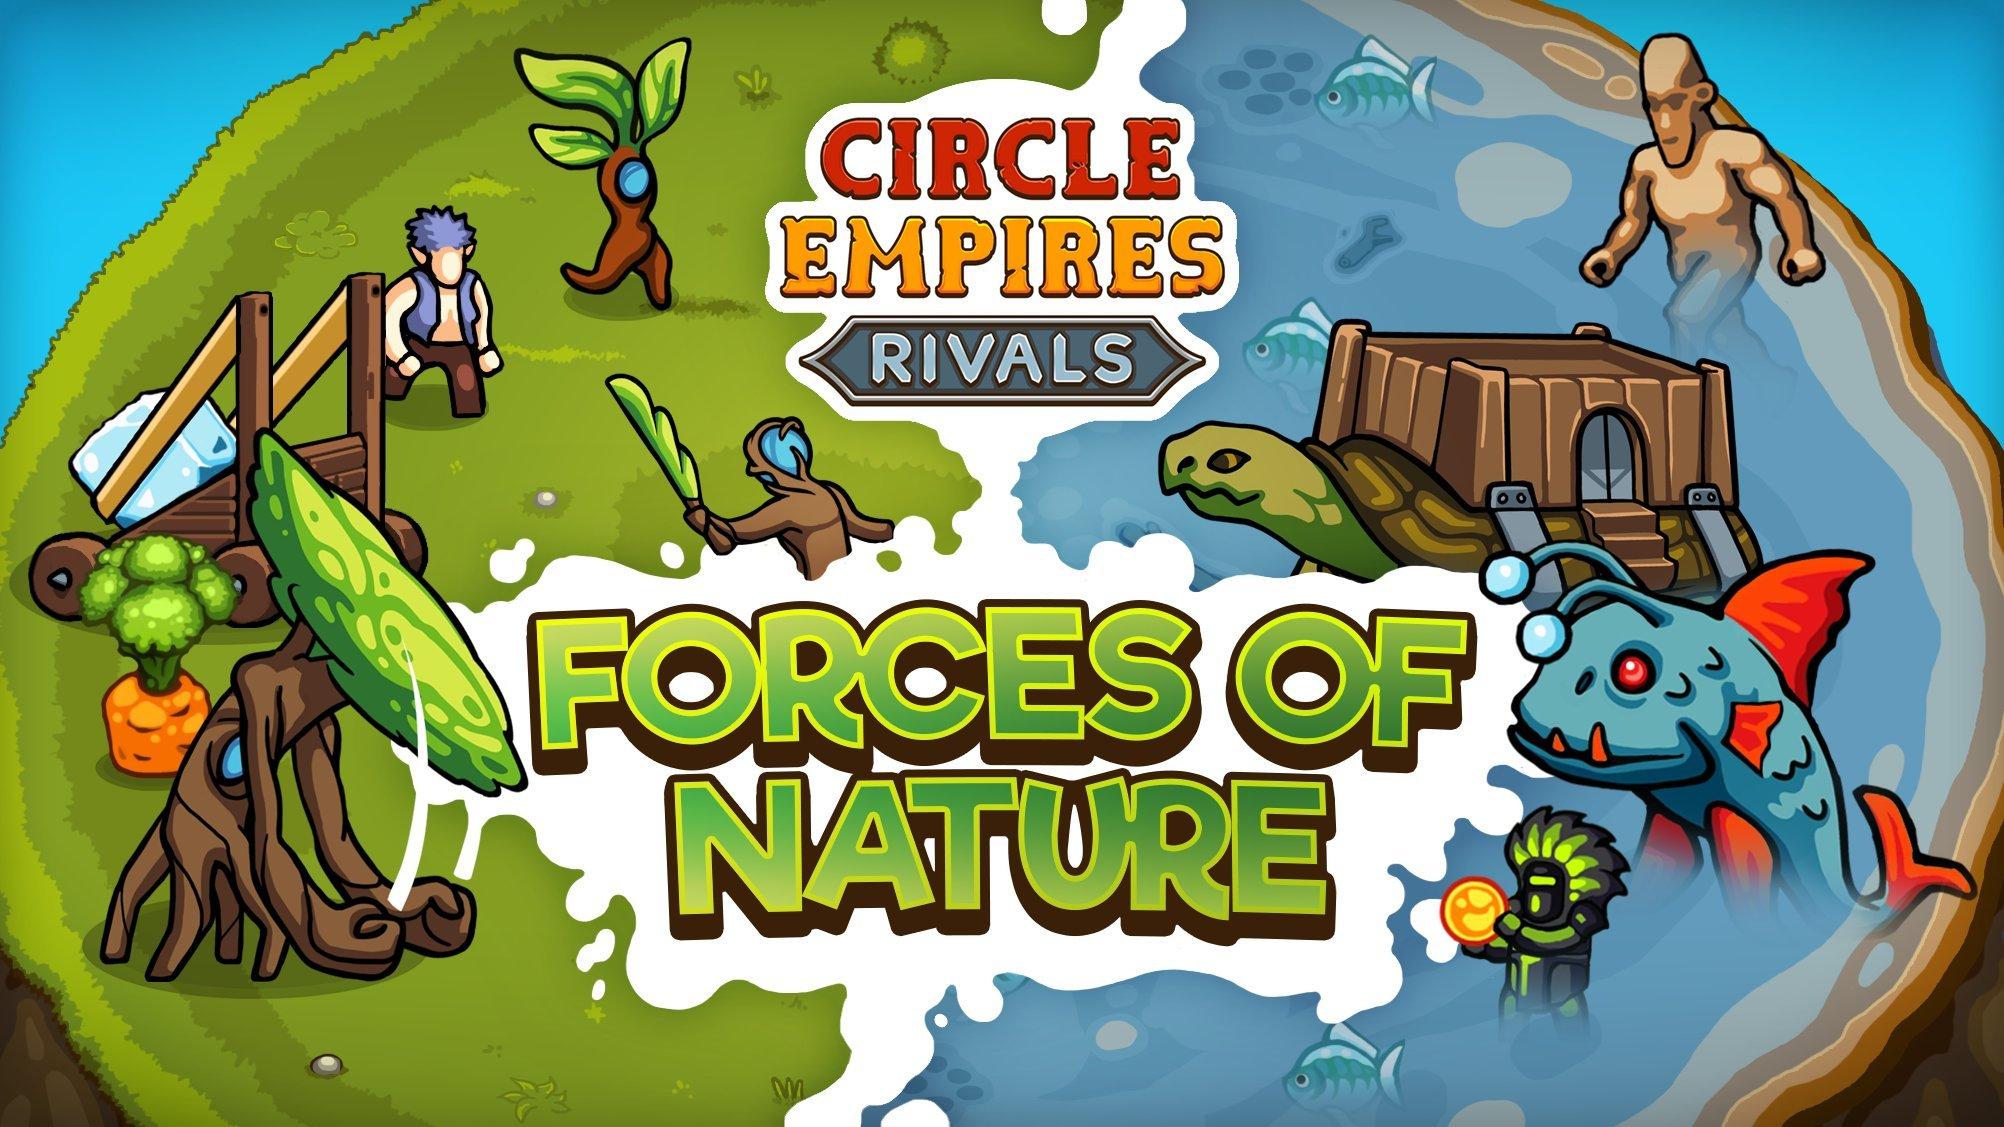 Circle Empires Rivals: Forces of Nature DLC